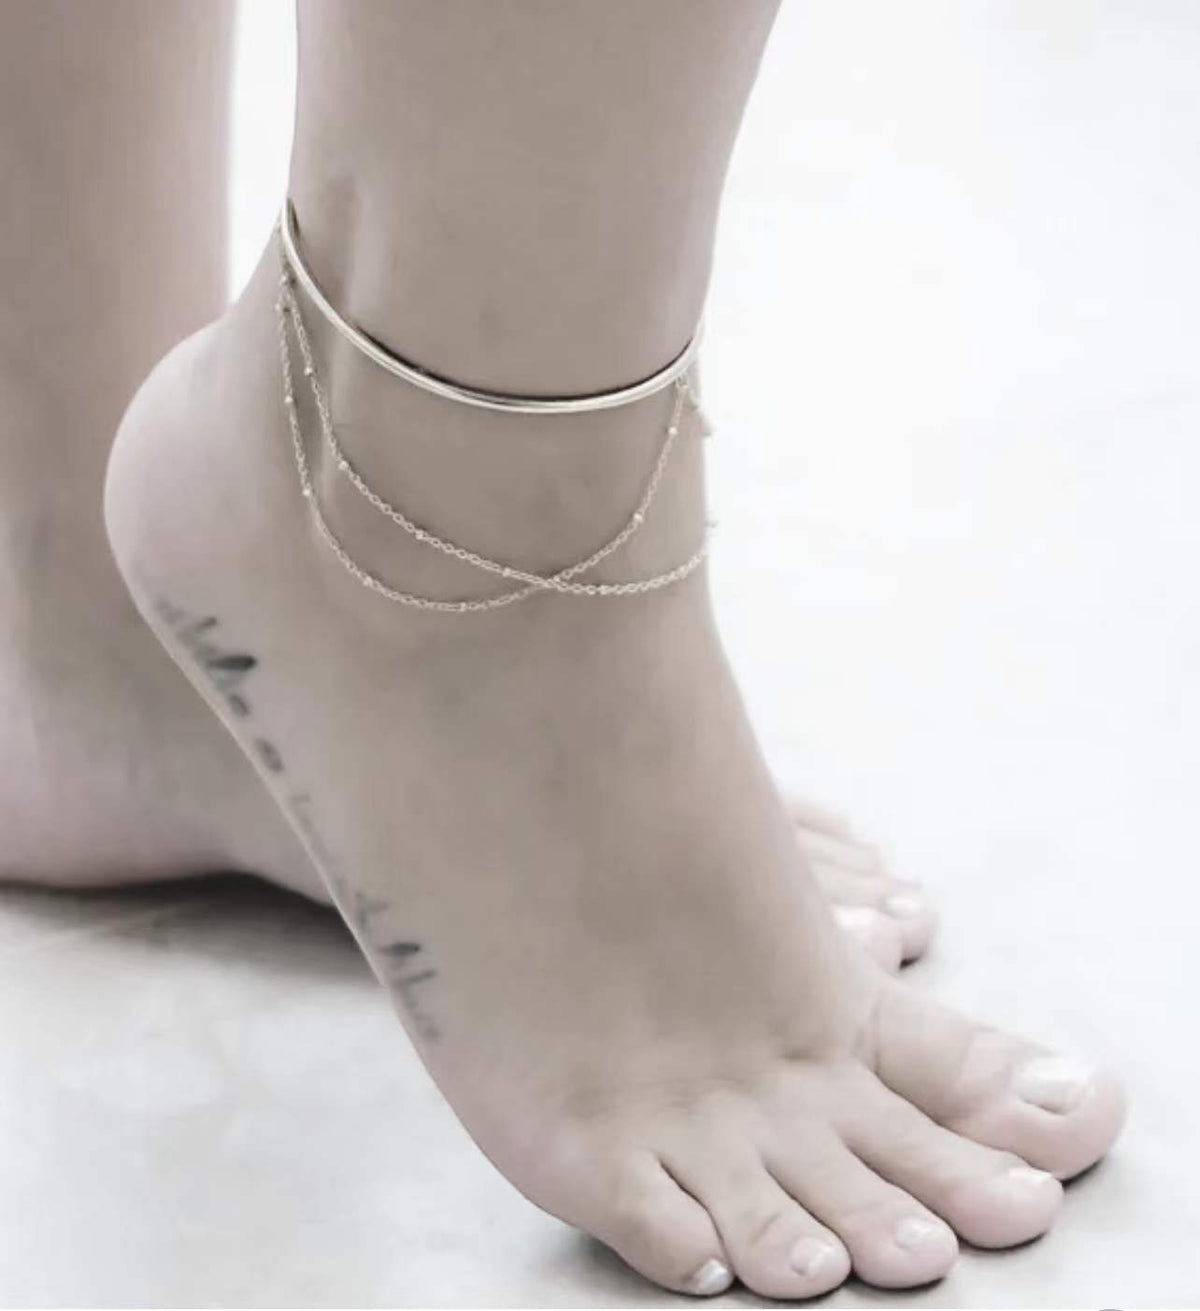 Strata Herring Bone Chain Anklet set in Sterling Silver